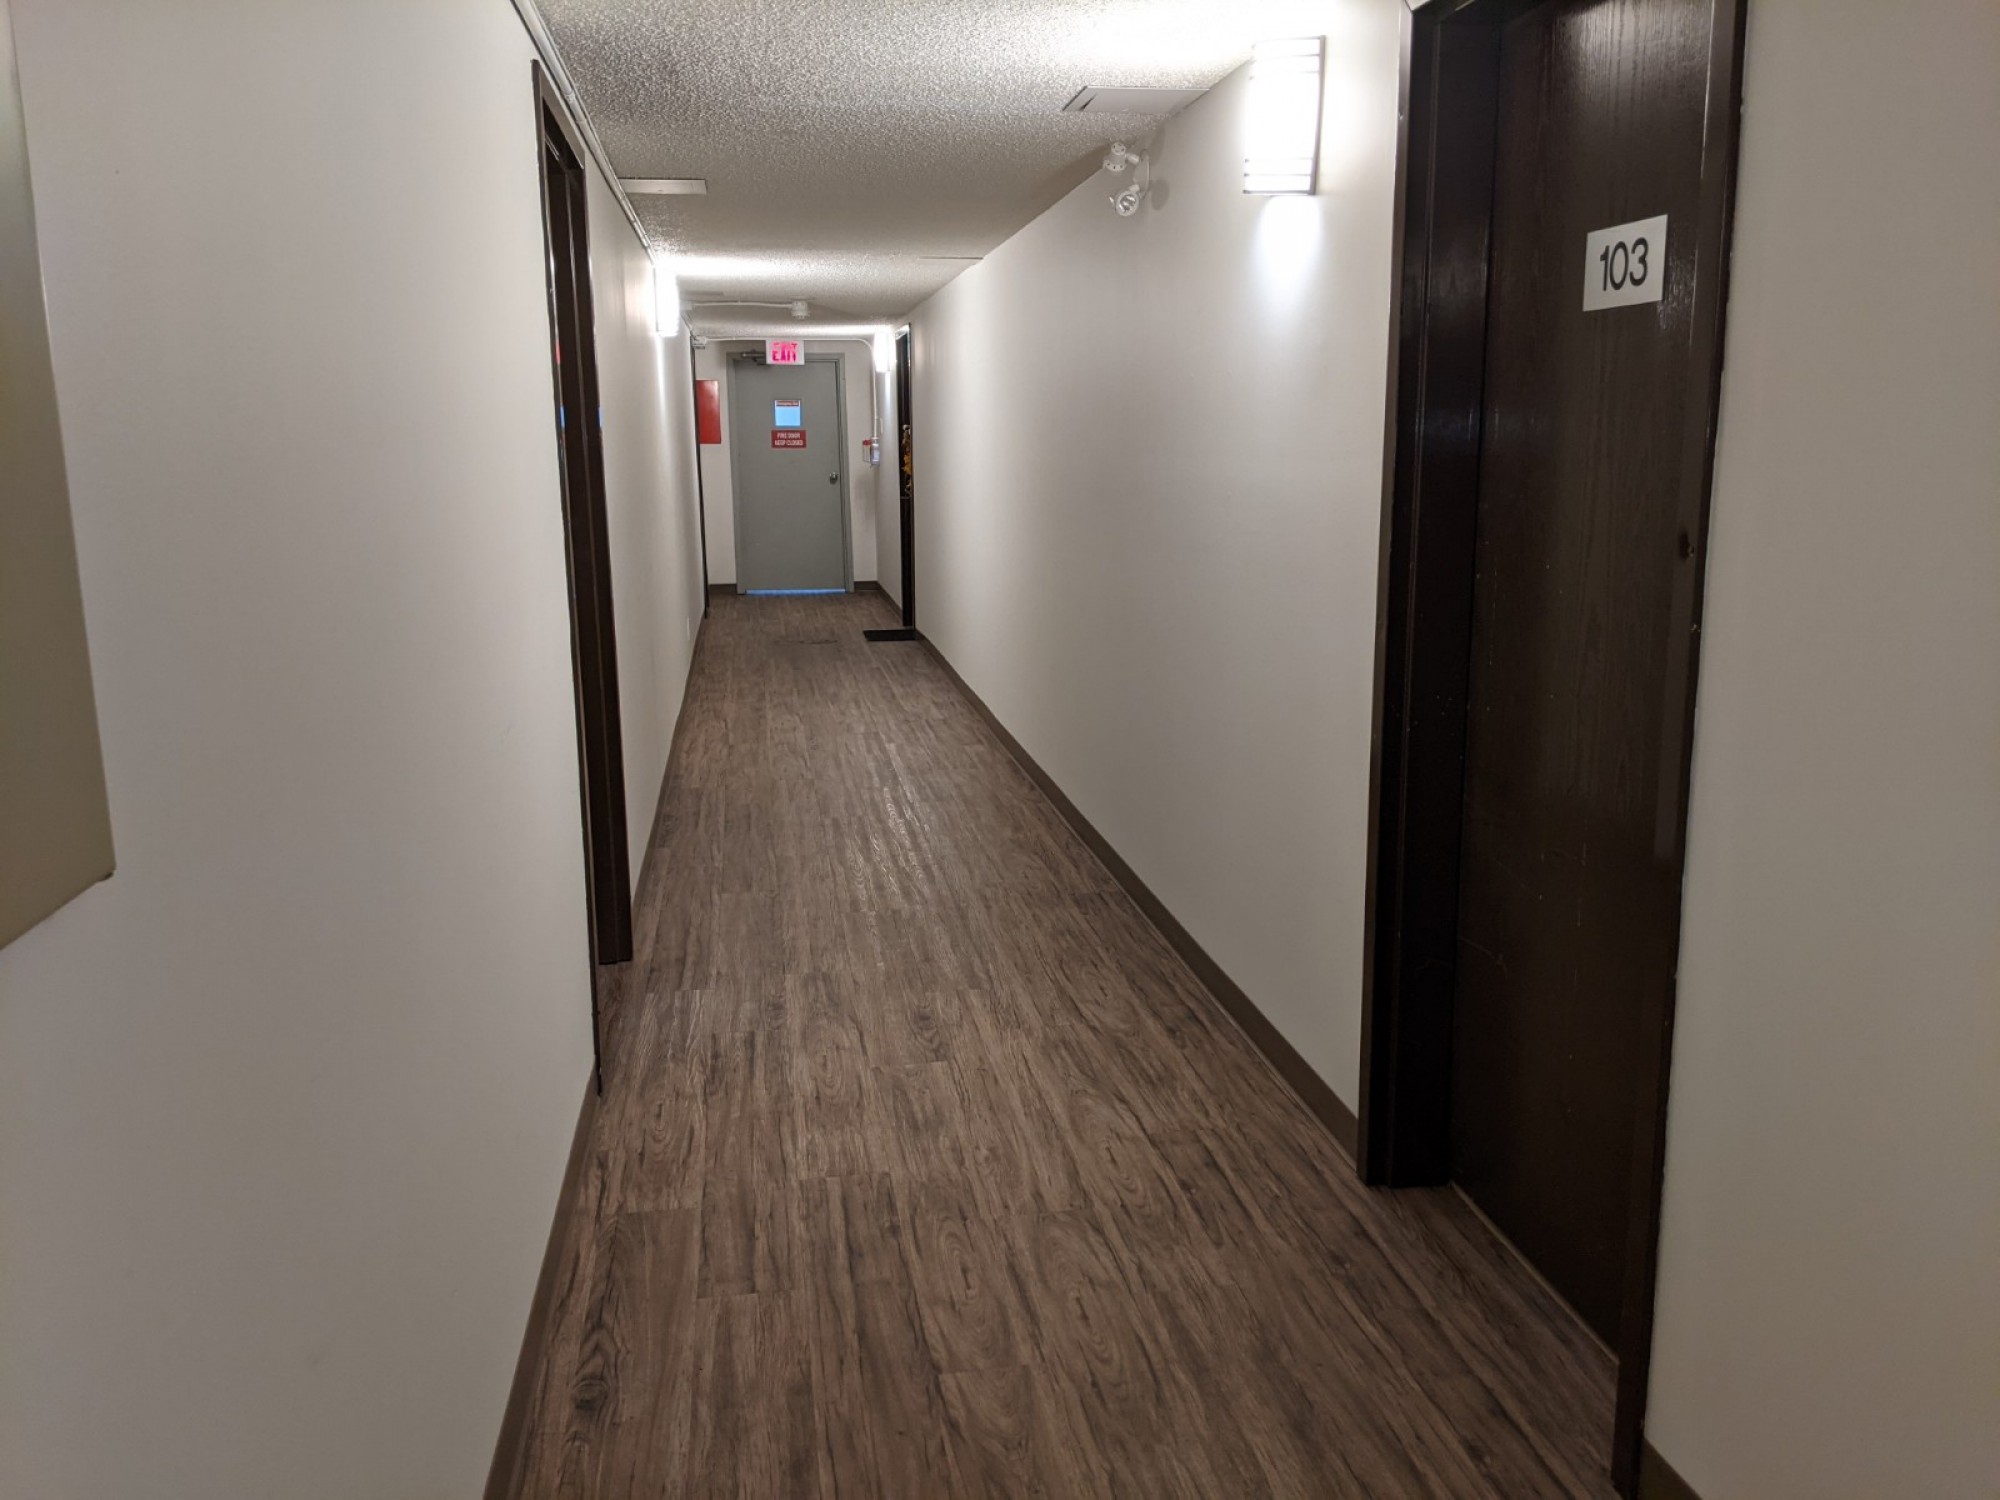 Hallway Key Image